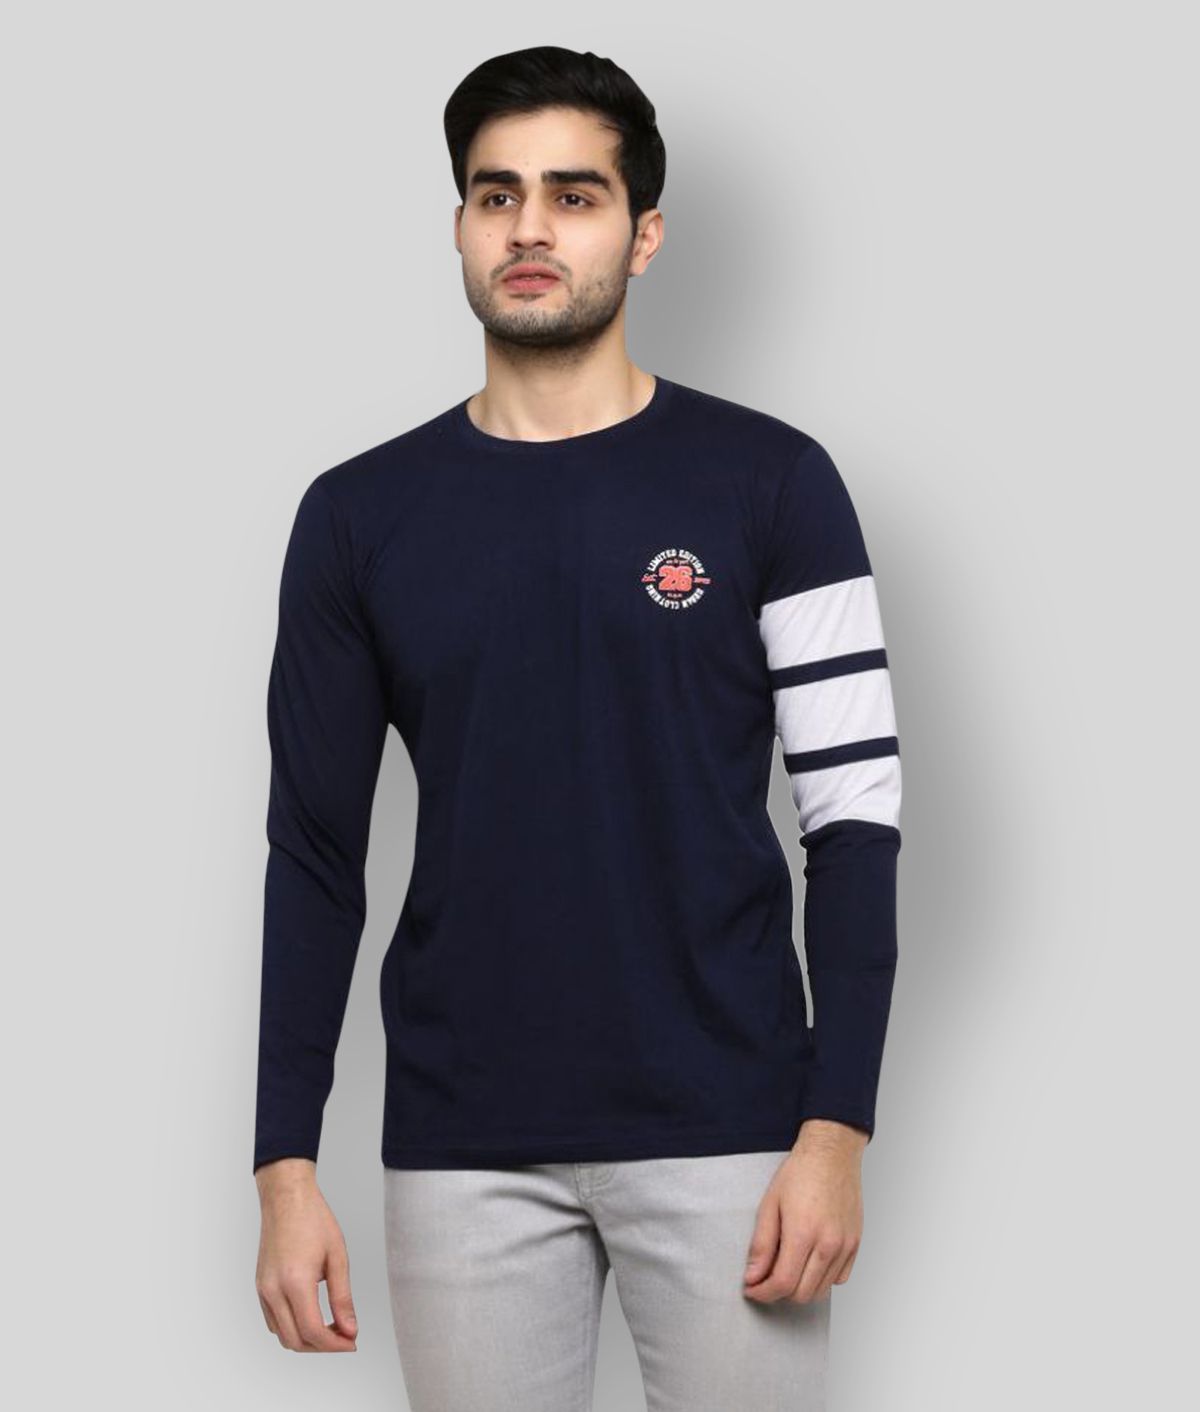     			GENTINO - Navy Blue Cotton Blend Regular Fit Men's T-Shirt ( Pack of 1 )